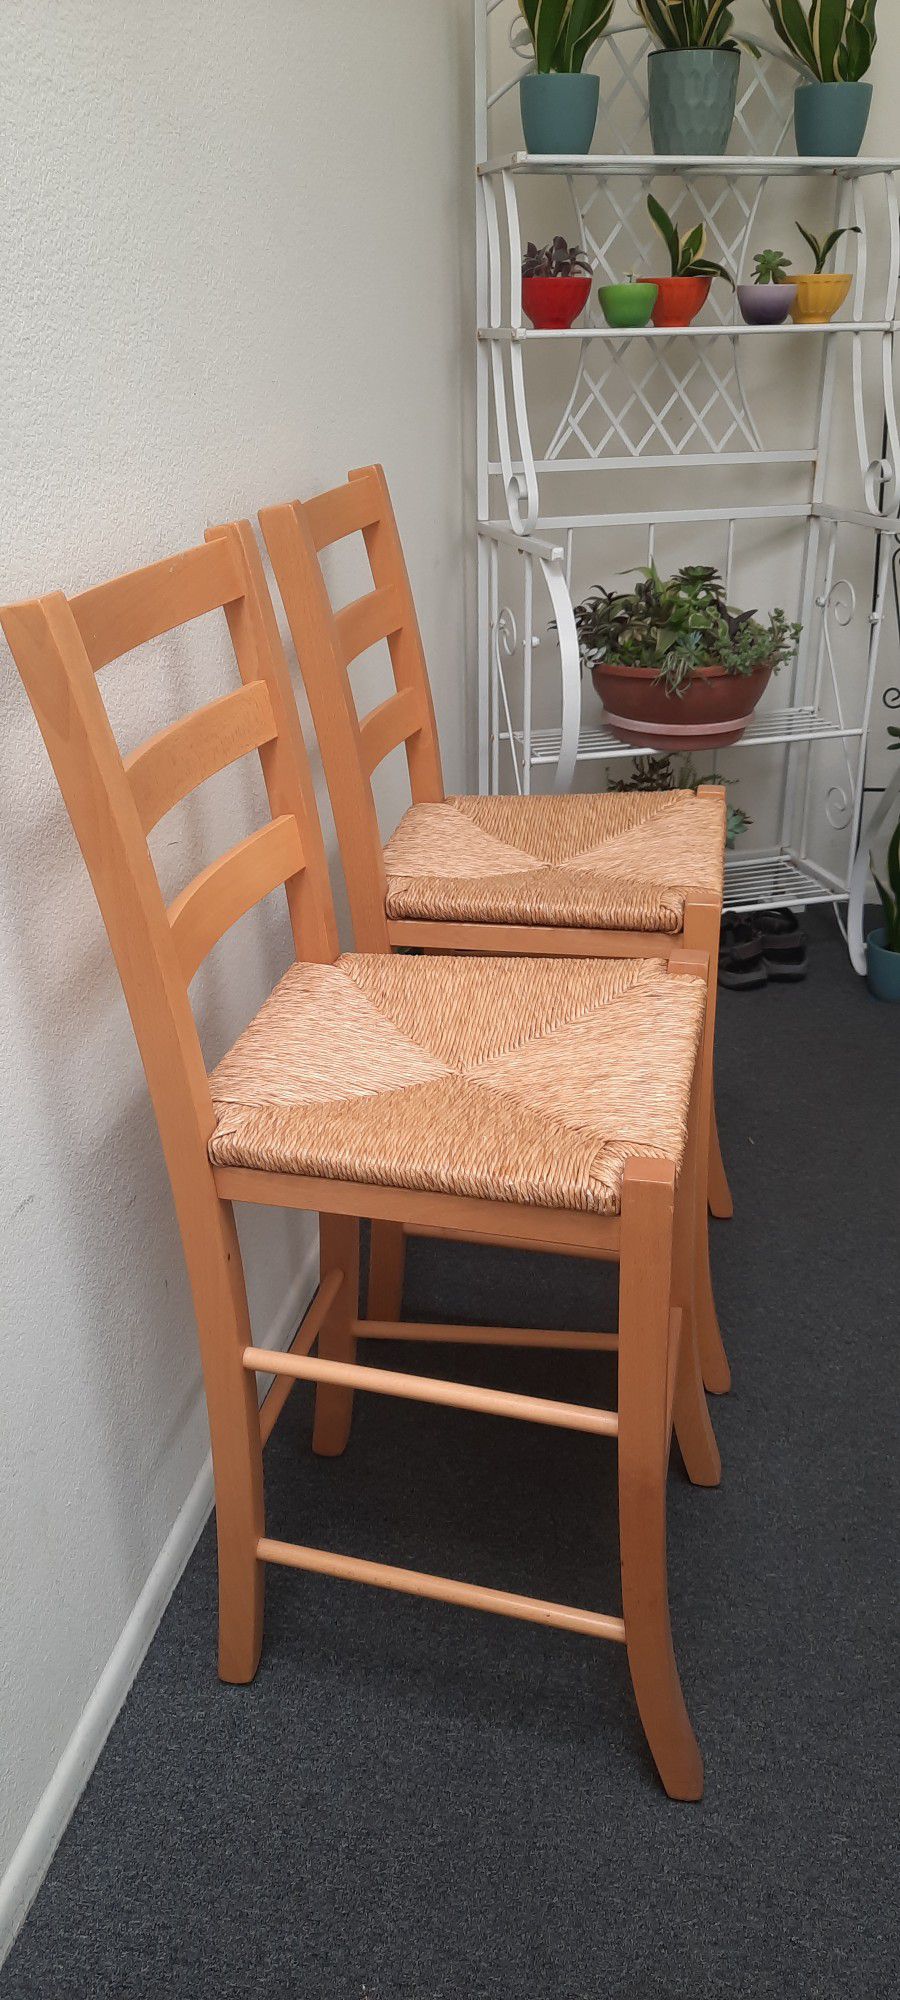 stools - set of 2